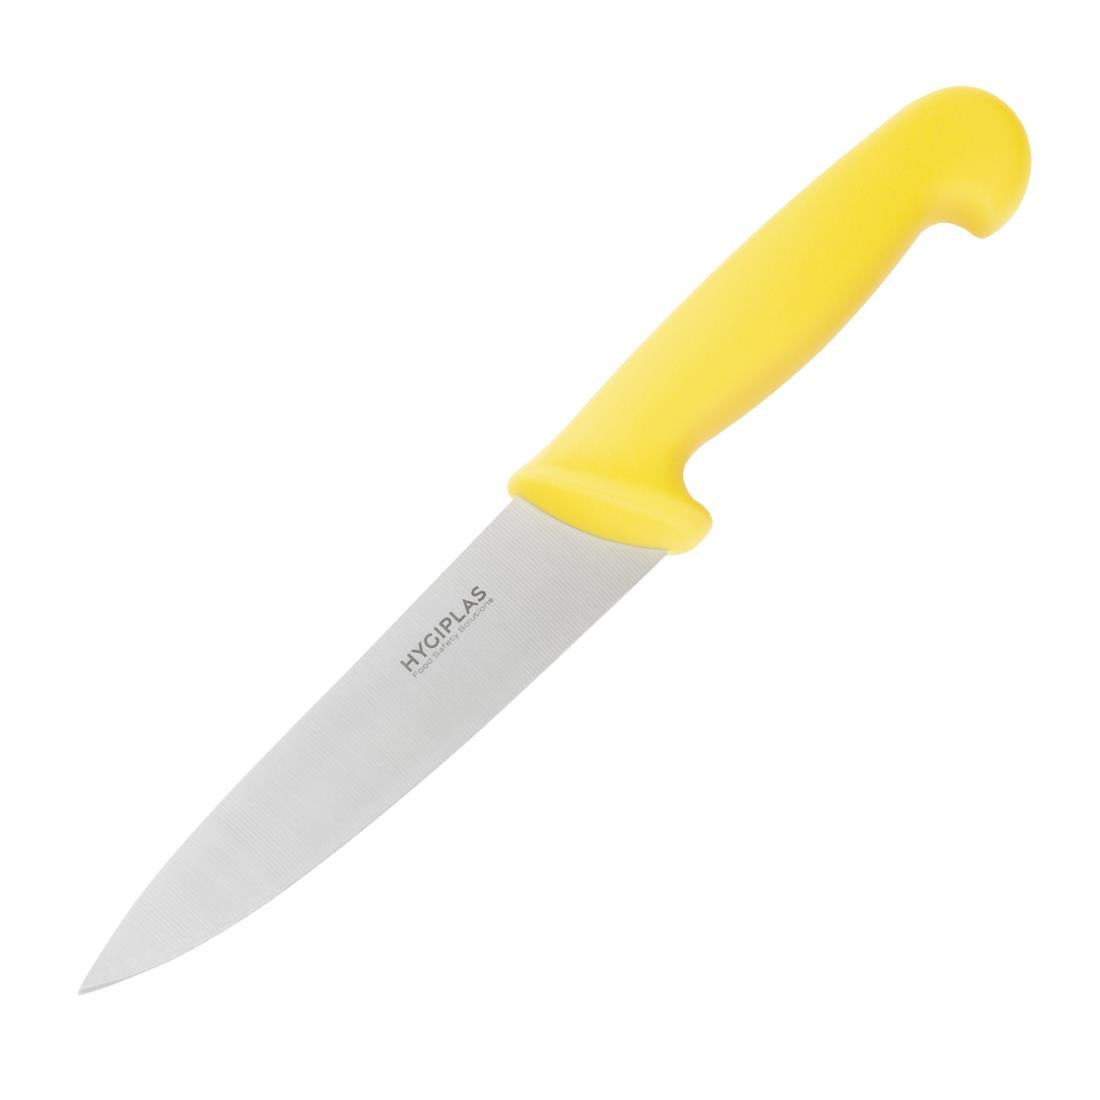 C815 Hygiplas Chefs Knife Yellow 16cm JD Catering Equipment Solutions Ltd